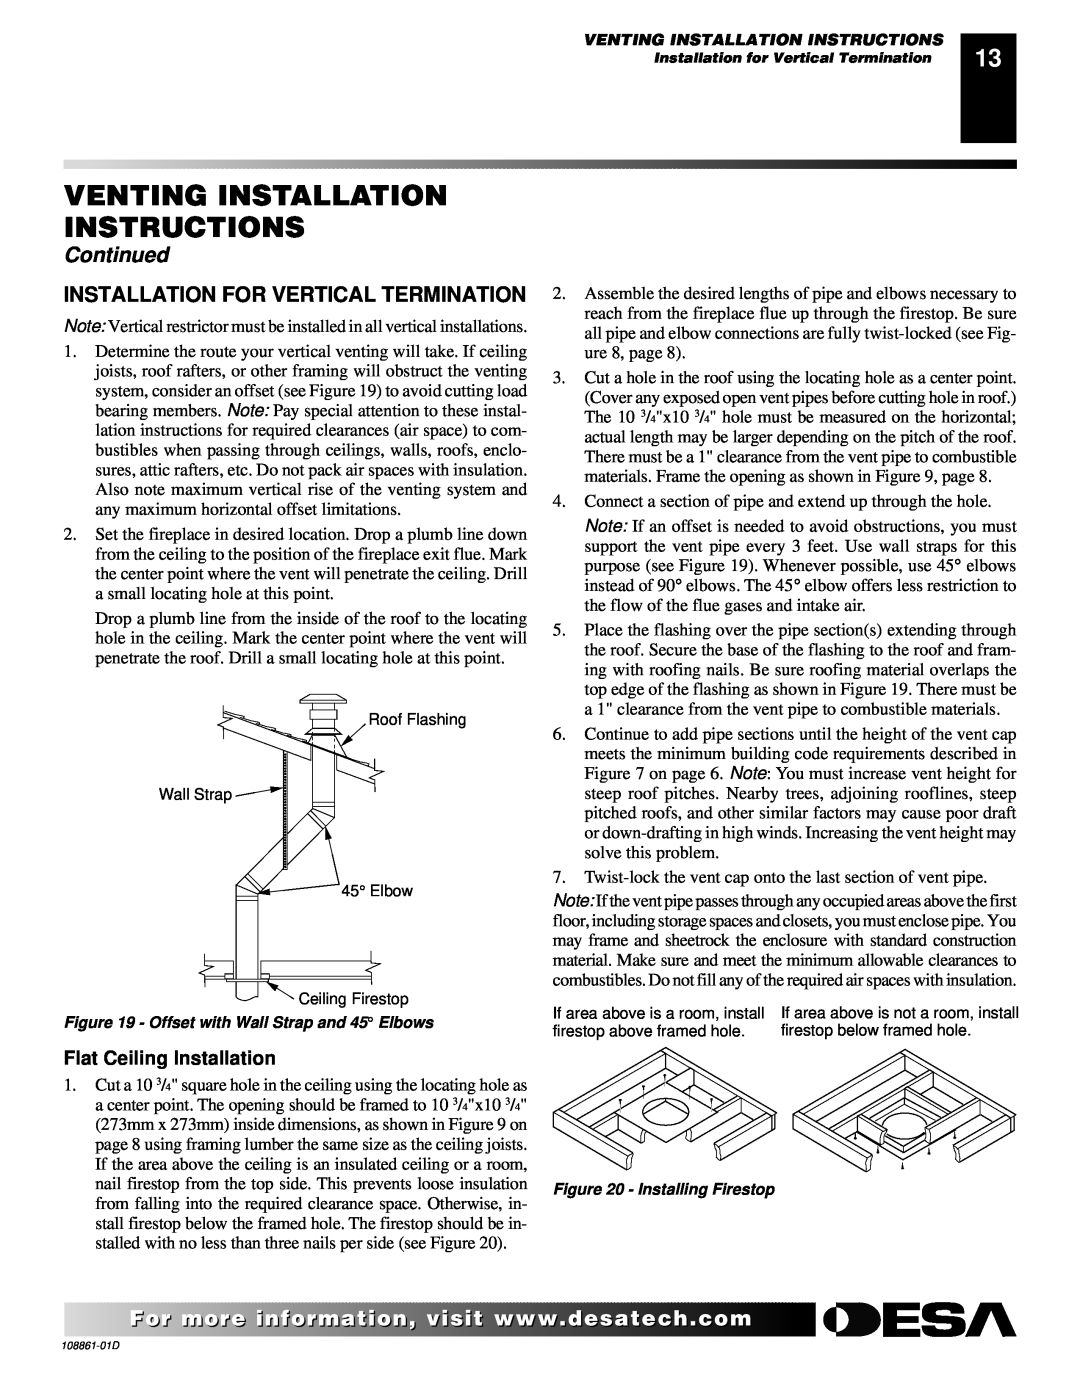 Desa CHDV36NR, (V)V42P Installation For Vertical Termination, Flat Ceiling Installation, Venting Installation Instructions 